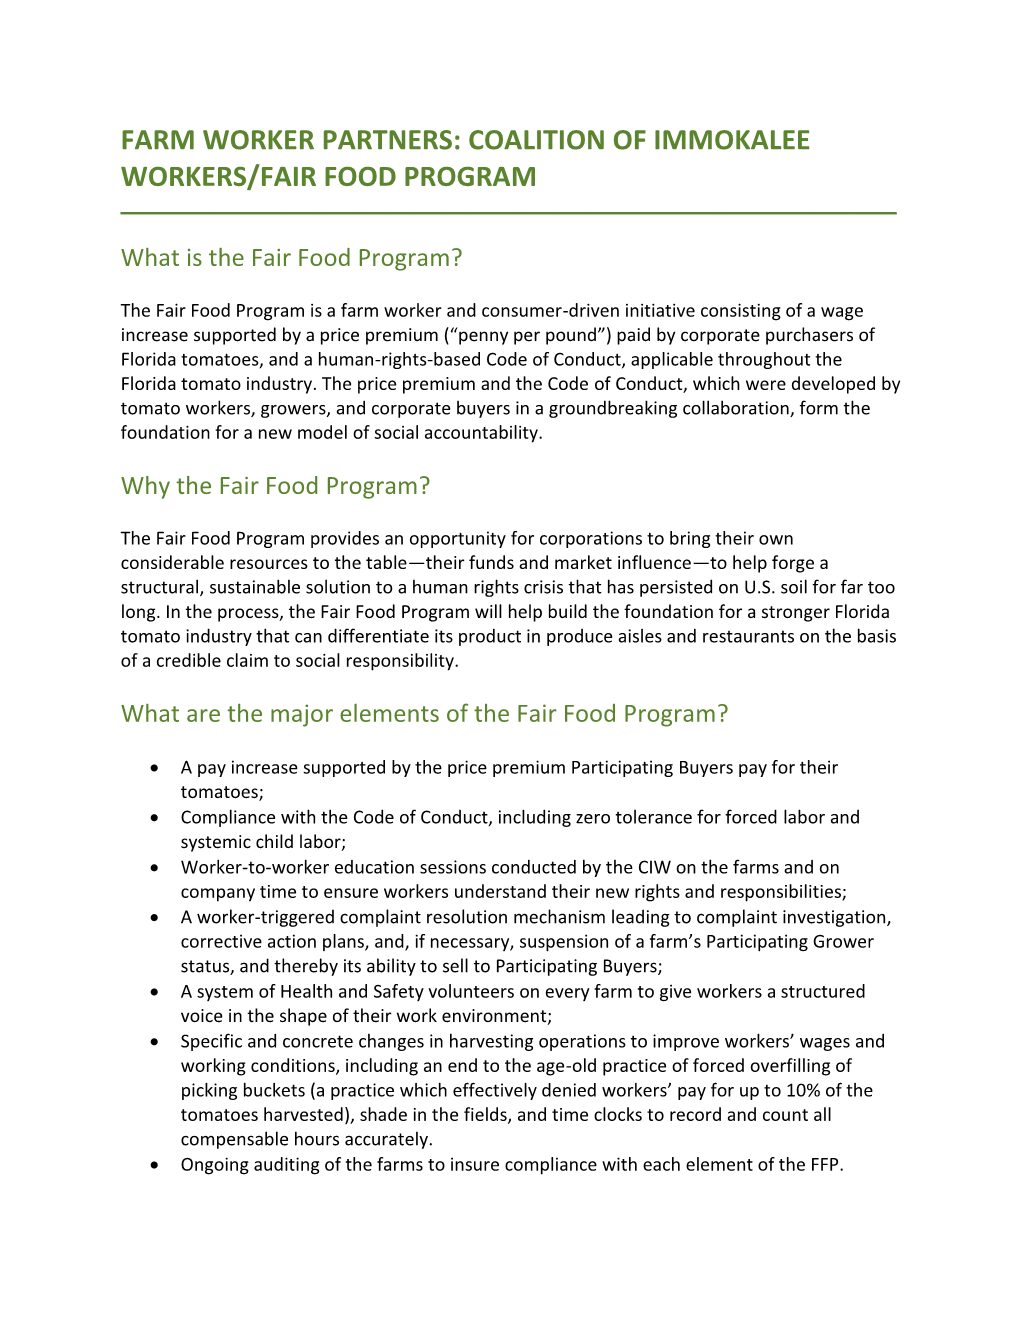 Download NFWM's Info Sheet About the Fair Food Program